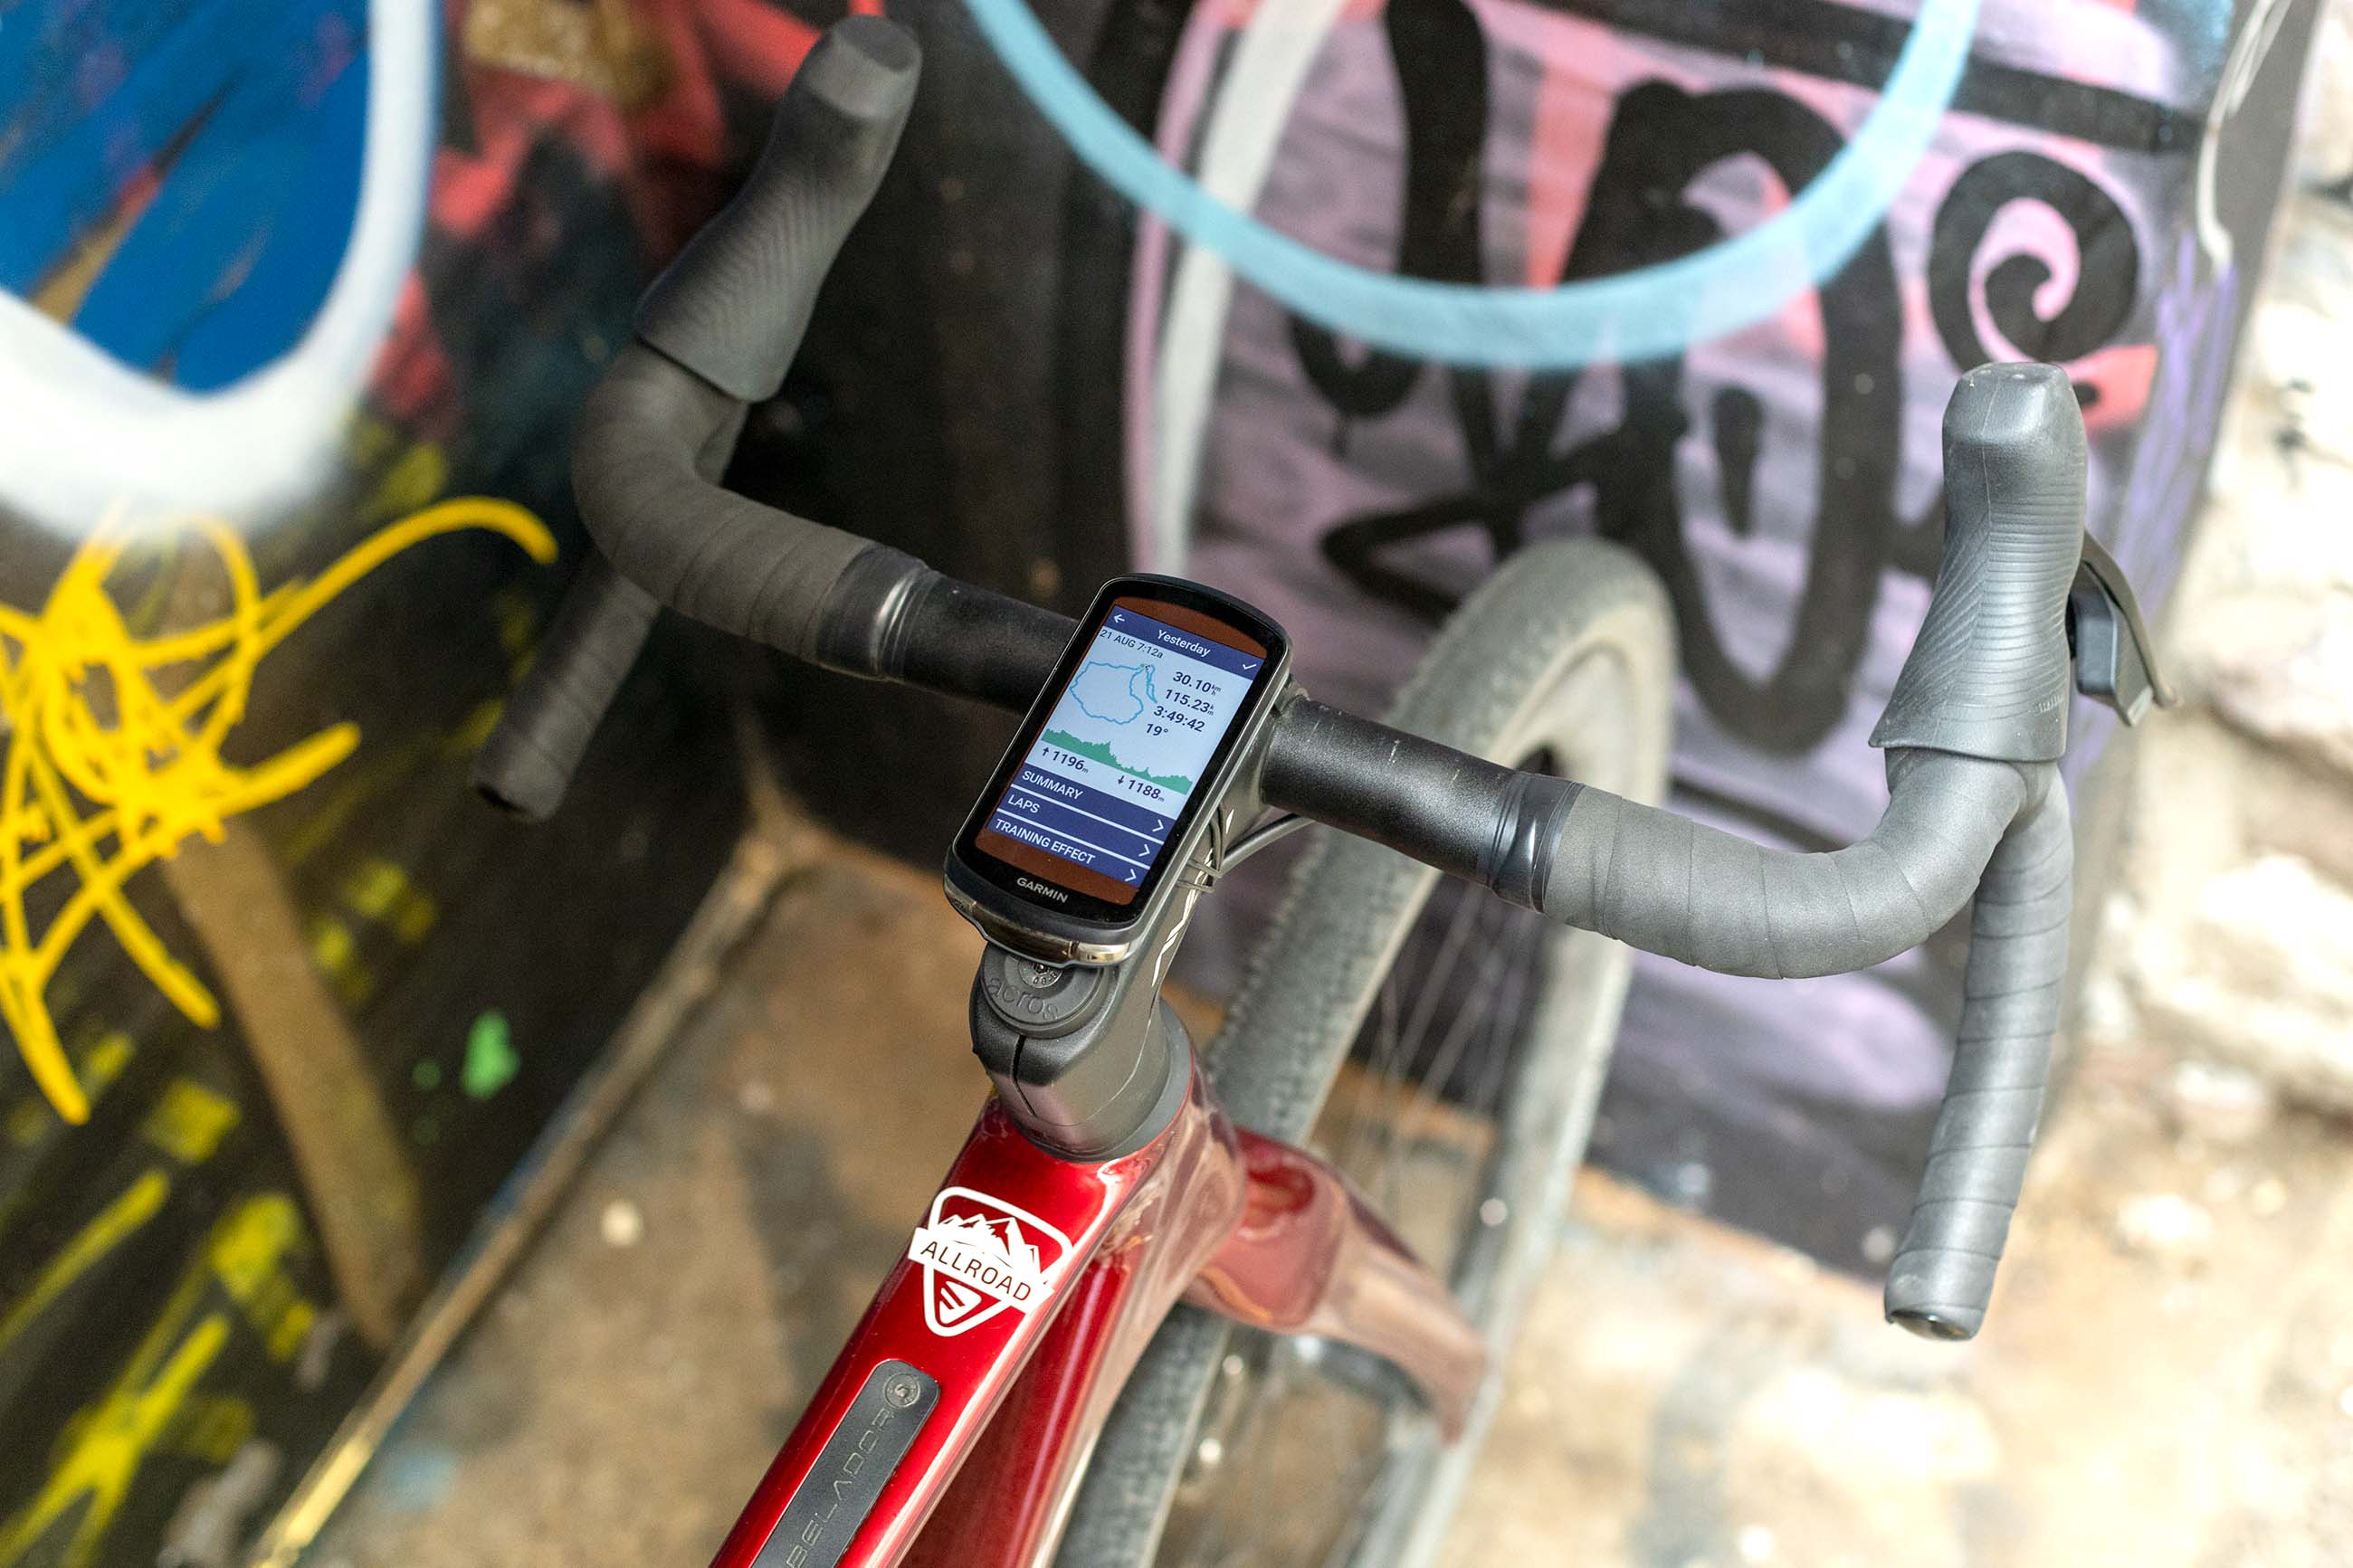 Garmin Edge® 1040 Solar  Cycling Computer with GPS